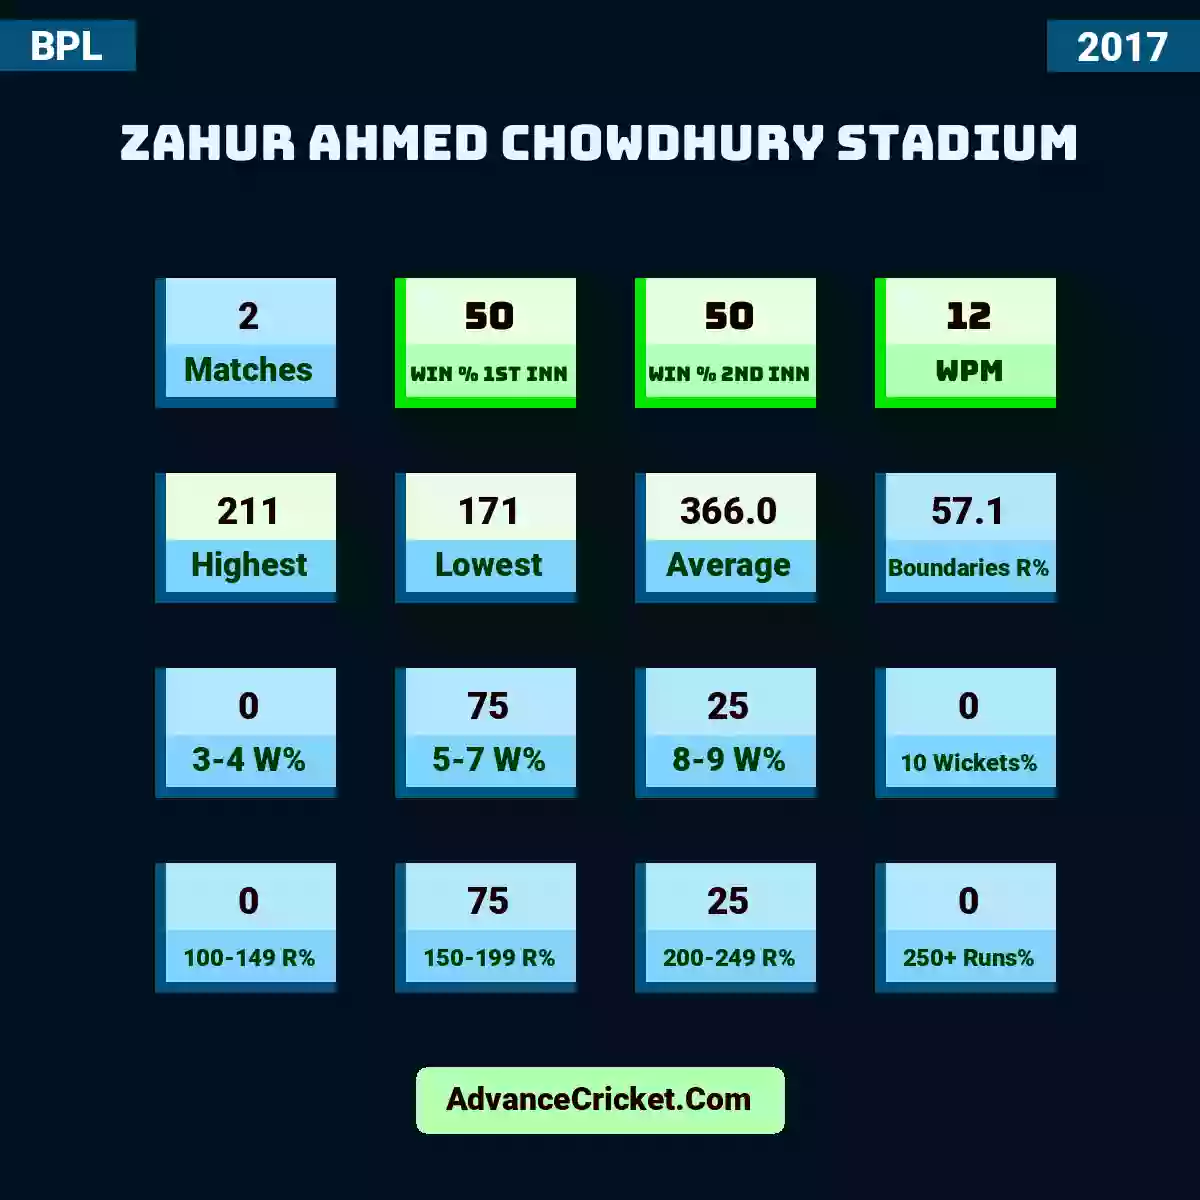 Image showing Zahur Ahmed Chowdhury Stadium with Matches: 2, Win % 1st Inn: 50, Win % 2nd Inn: 50, WPM: 12, Highest: 211, Lowest: 171, Average: 366.0, Boundaries R%: 57.1, 3-4 W%: 0, 5-7 W%: 75, 8-9 W%: 25, 10 Wickets%: 0, 100-149 R%: 0, 150-199 R%: 75, 200-249 R%: 25, 250+ Runs%: 0.